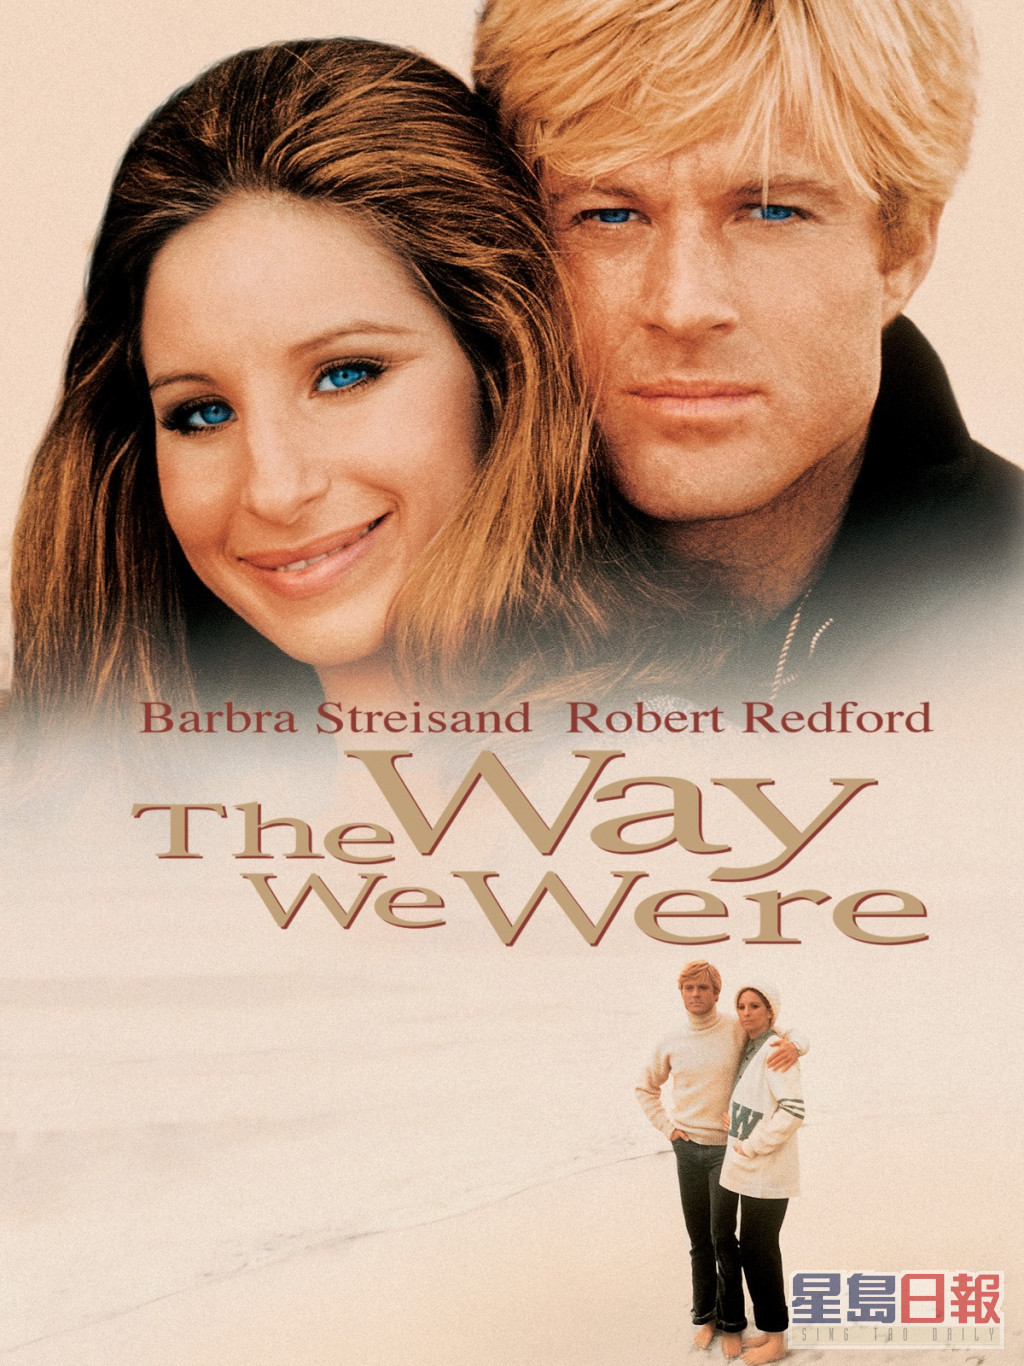 Marilyn Bergman夫婦有份創作《俏郎君》電影歌曲《The Way We Were》，並贏得奧斯卡，此原聲大碟再奪格林美獎。